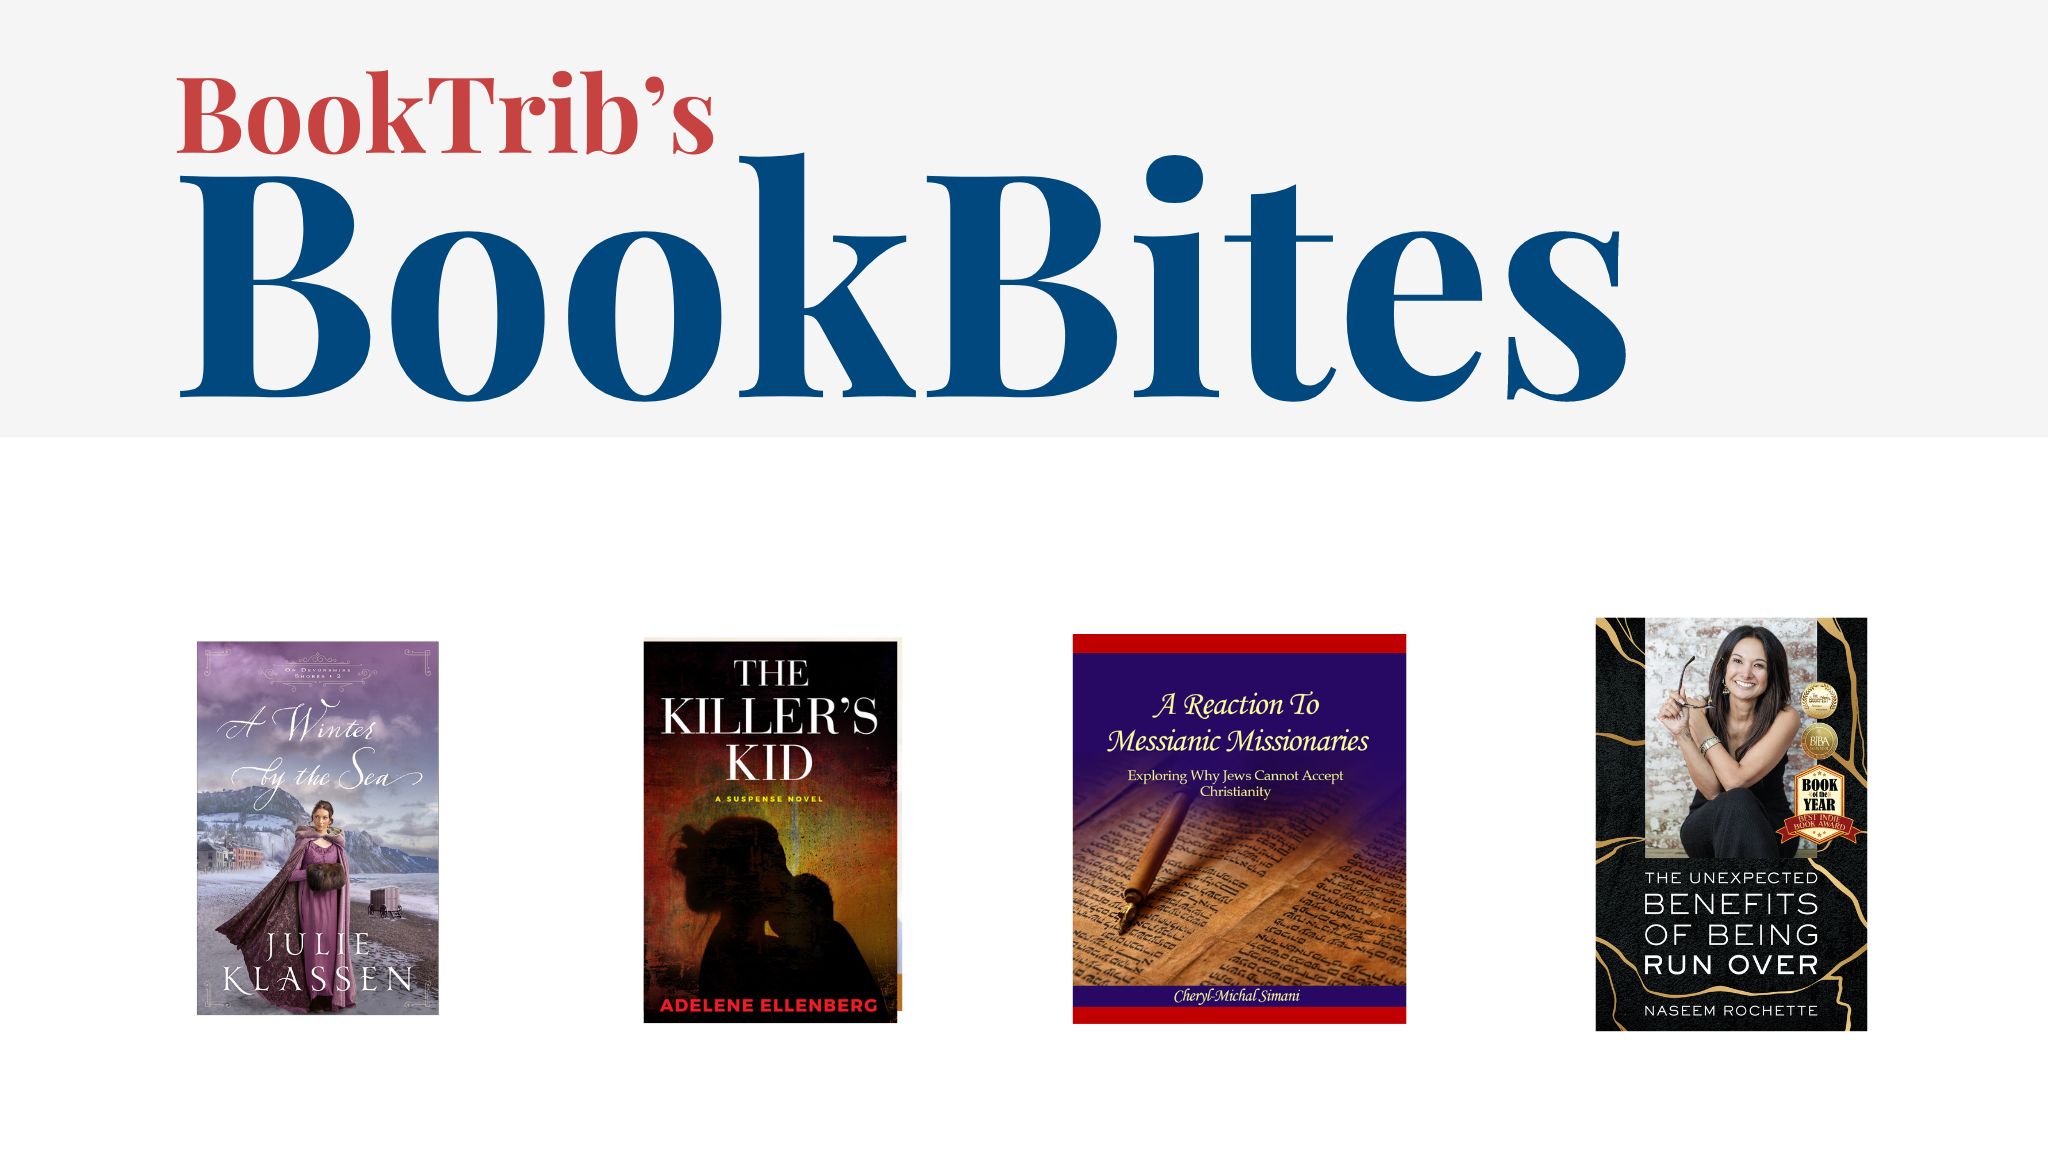 BookTrib's BookBites